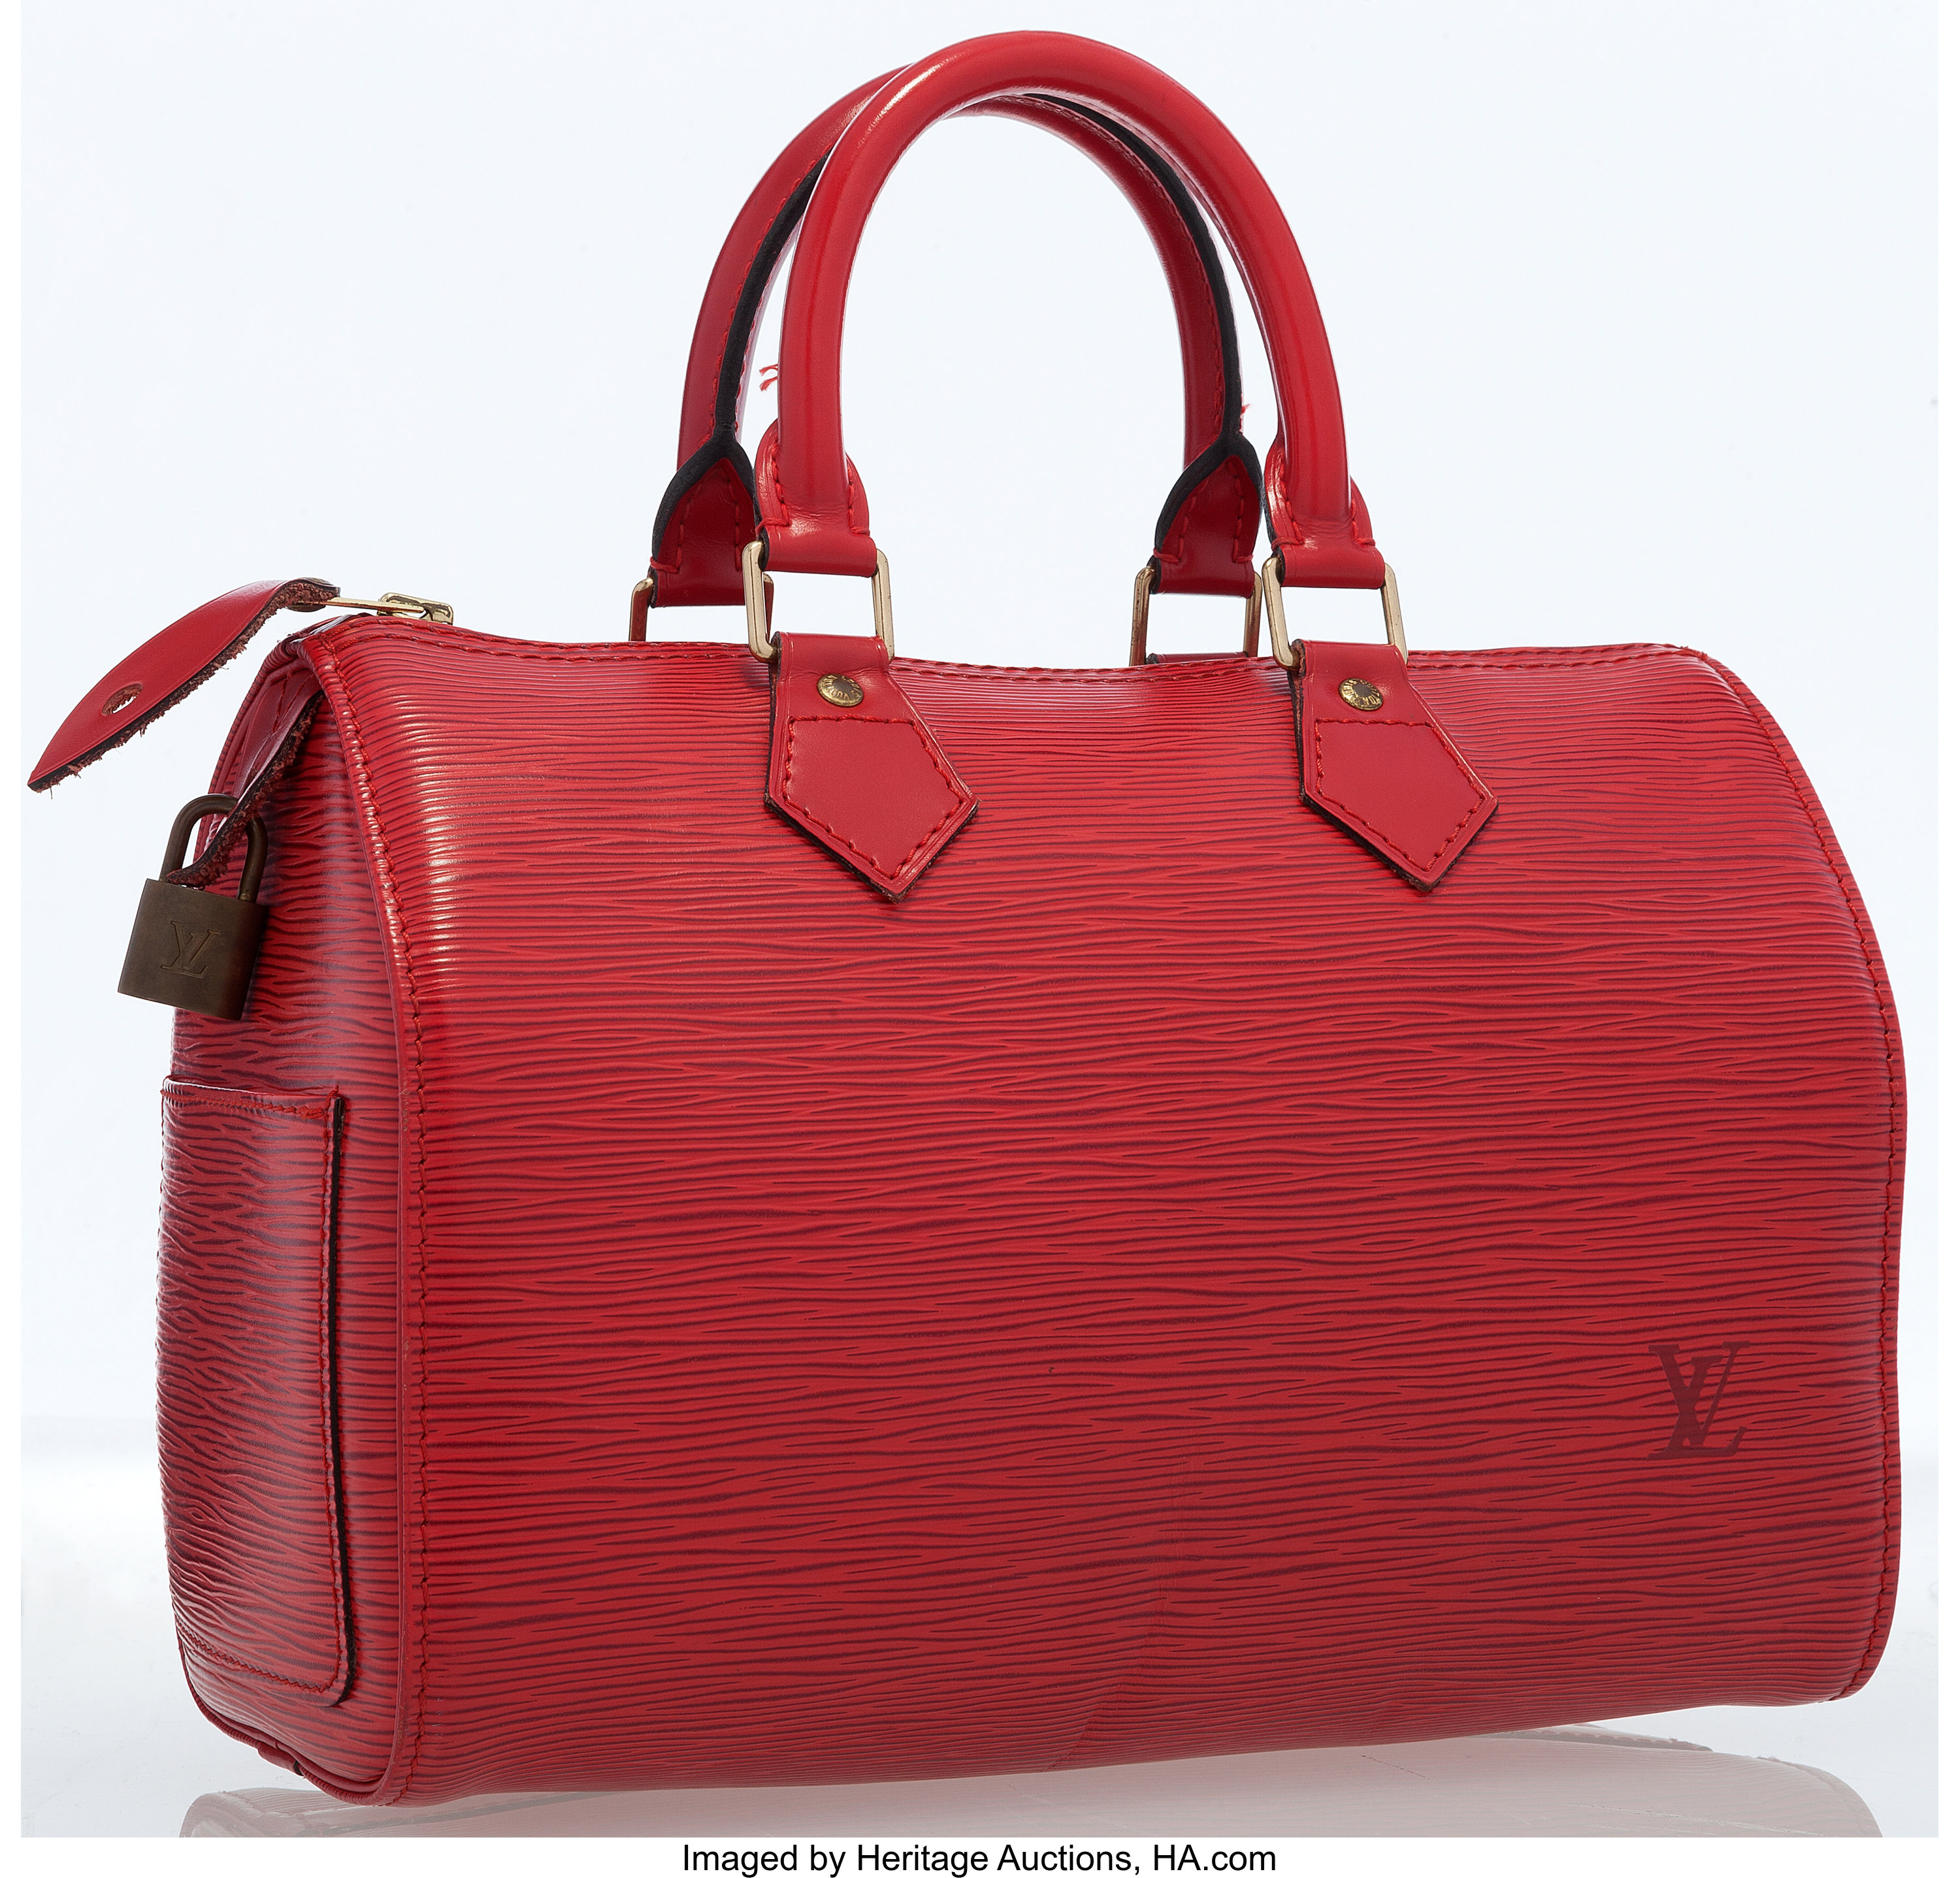 Sold at Auction: Louis Vuitton, Louis Vuitton Fuchsia Epi Leather